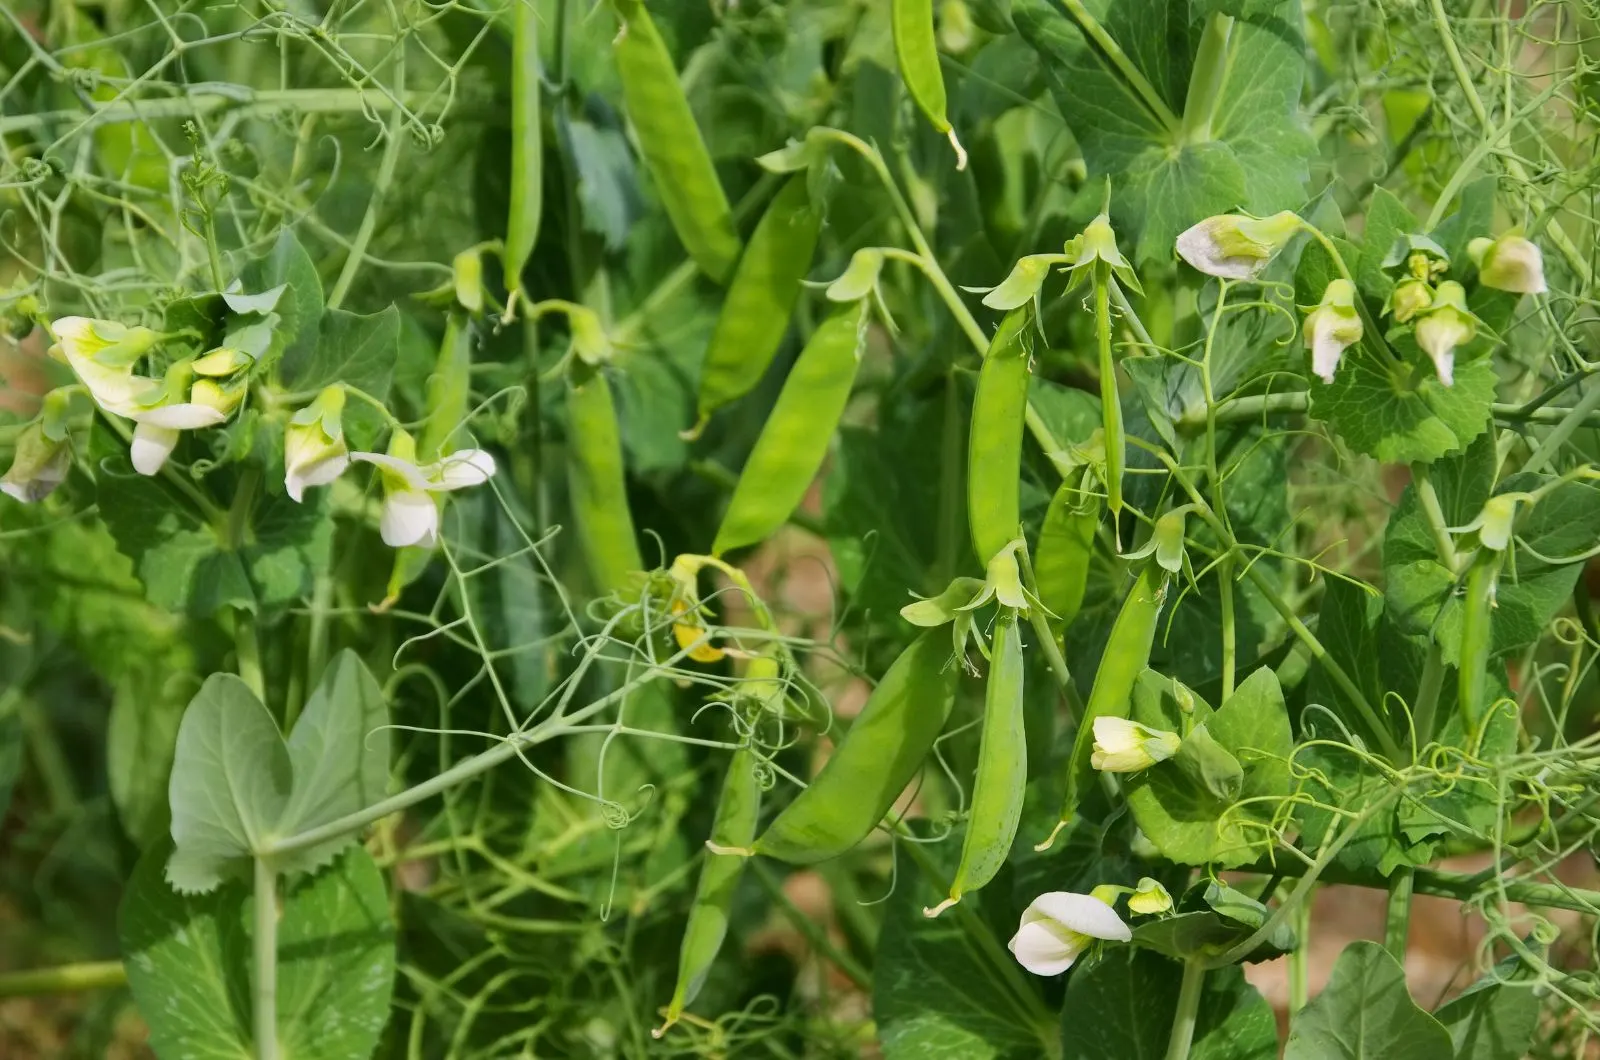 peas plant in the garden